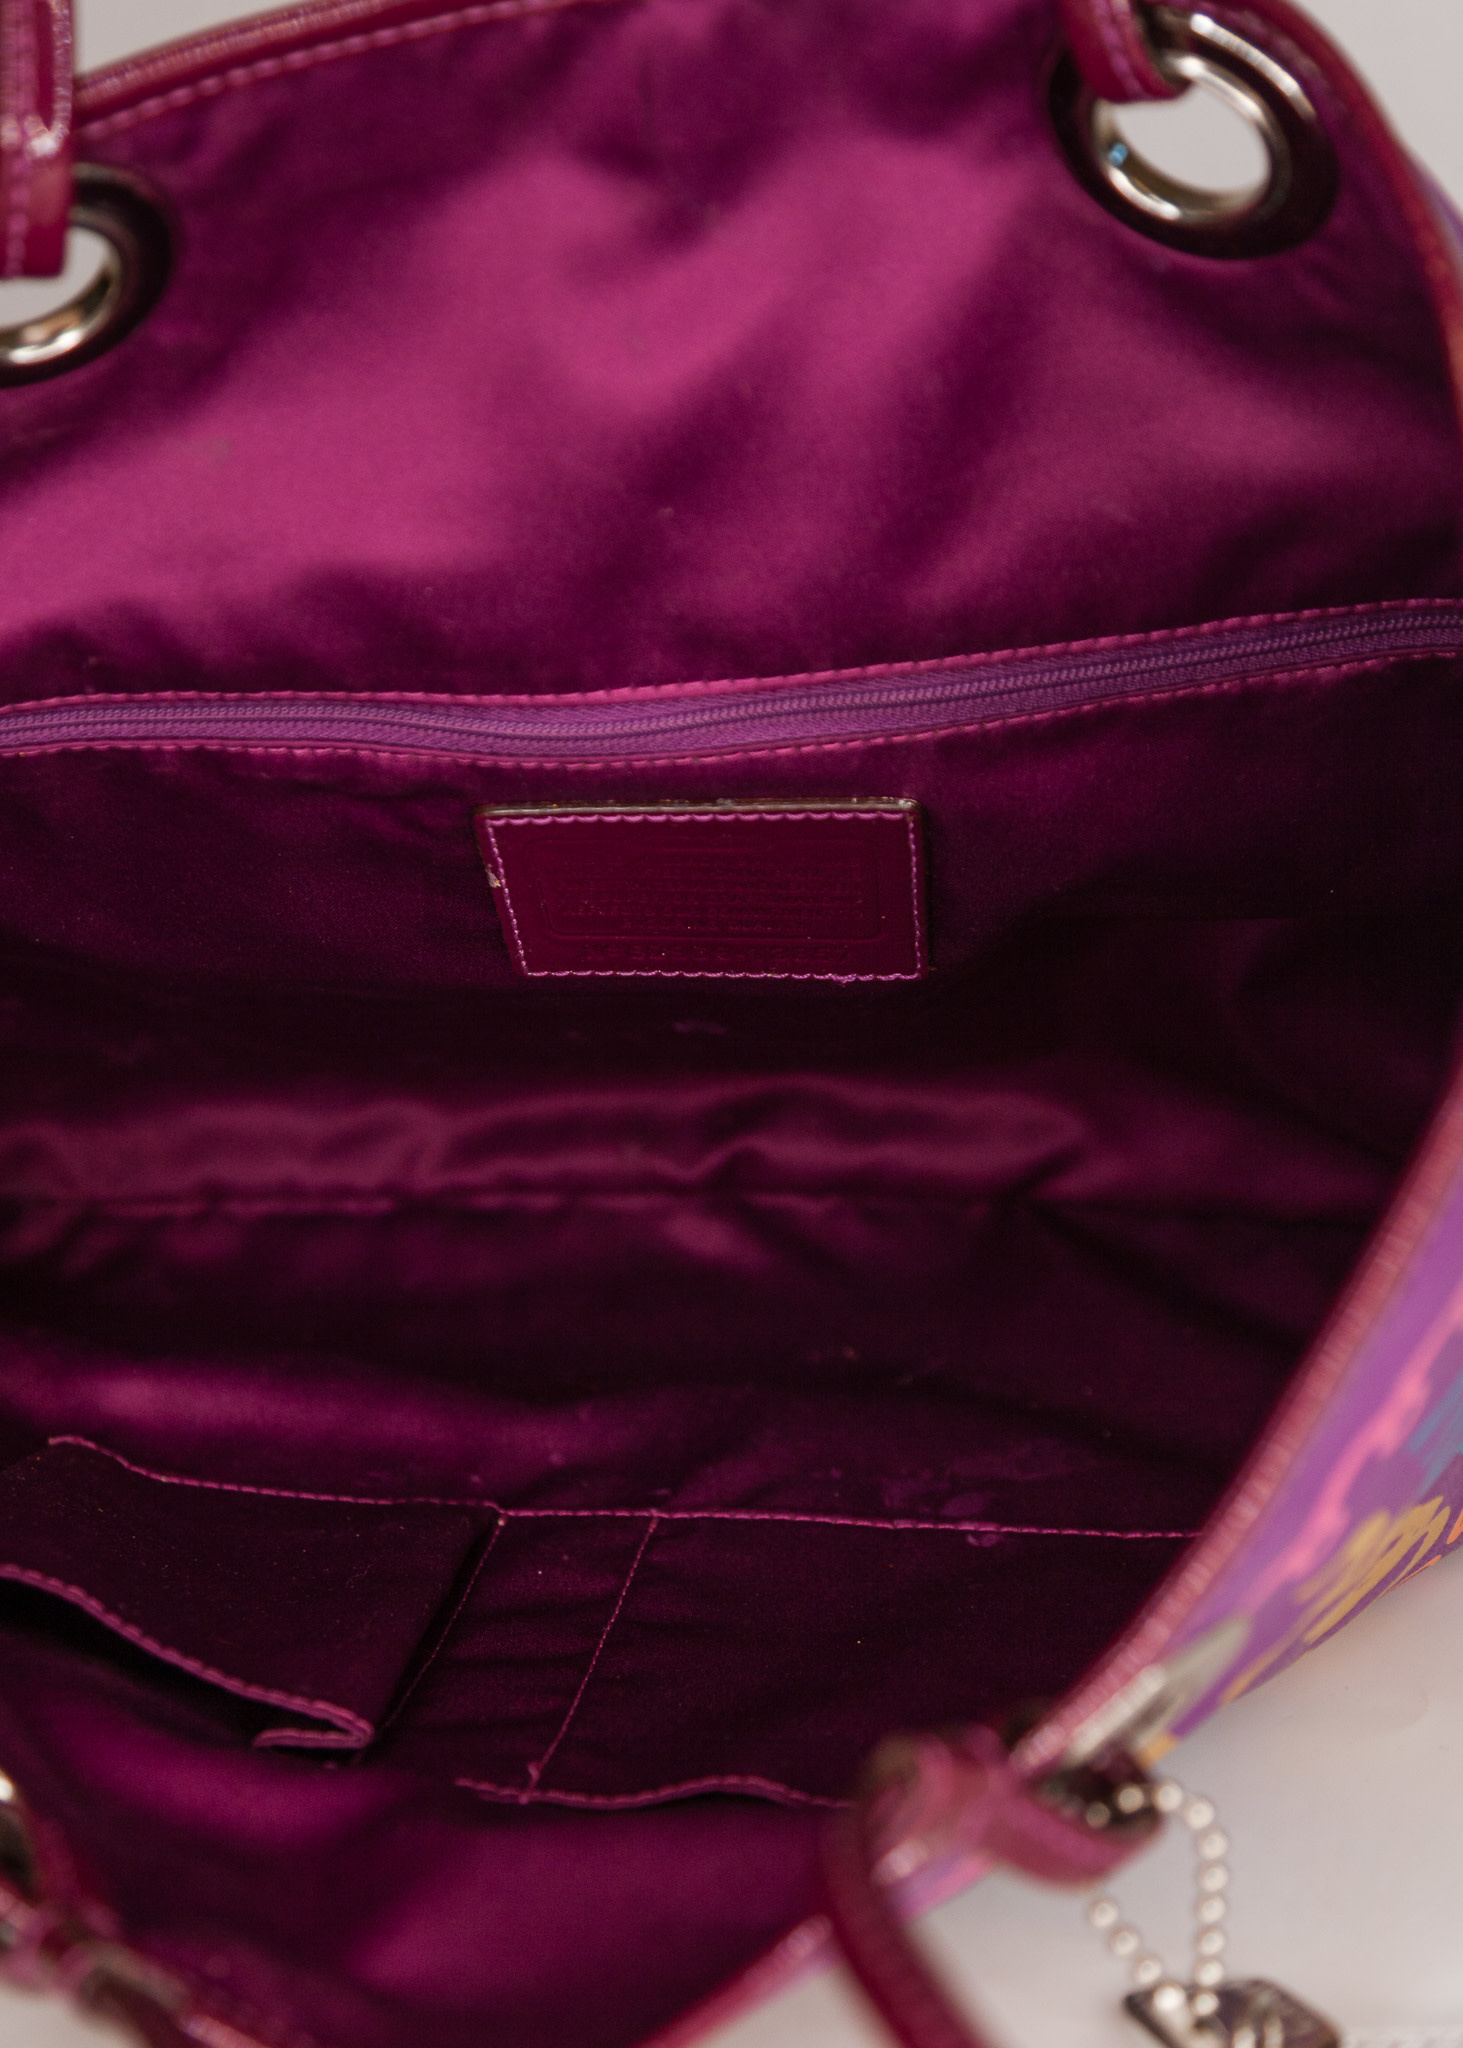 COACH Poppy Pop Glam Bag Purse Tote Glitter Gold Pink Purple Multi Color  Rainbow